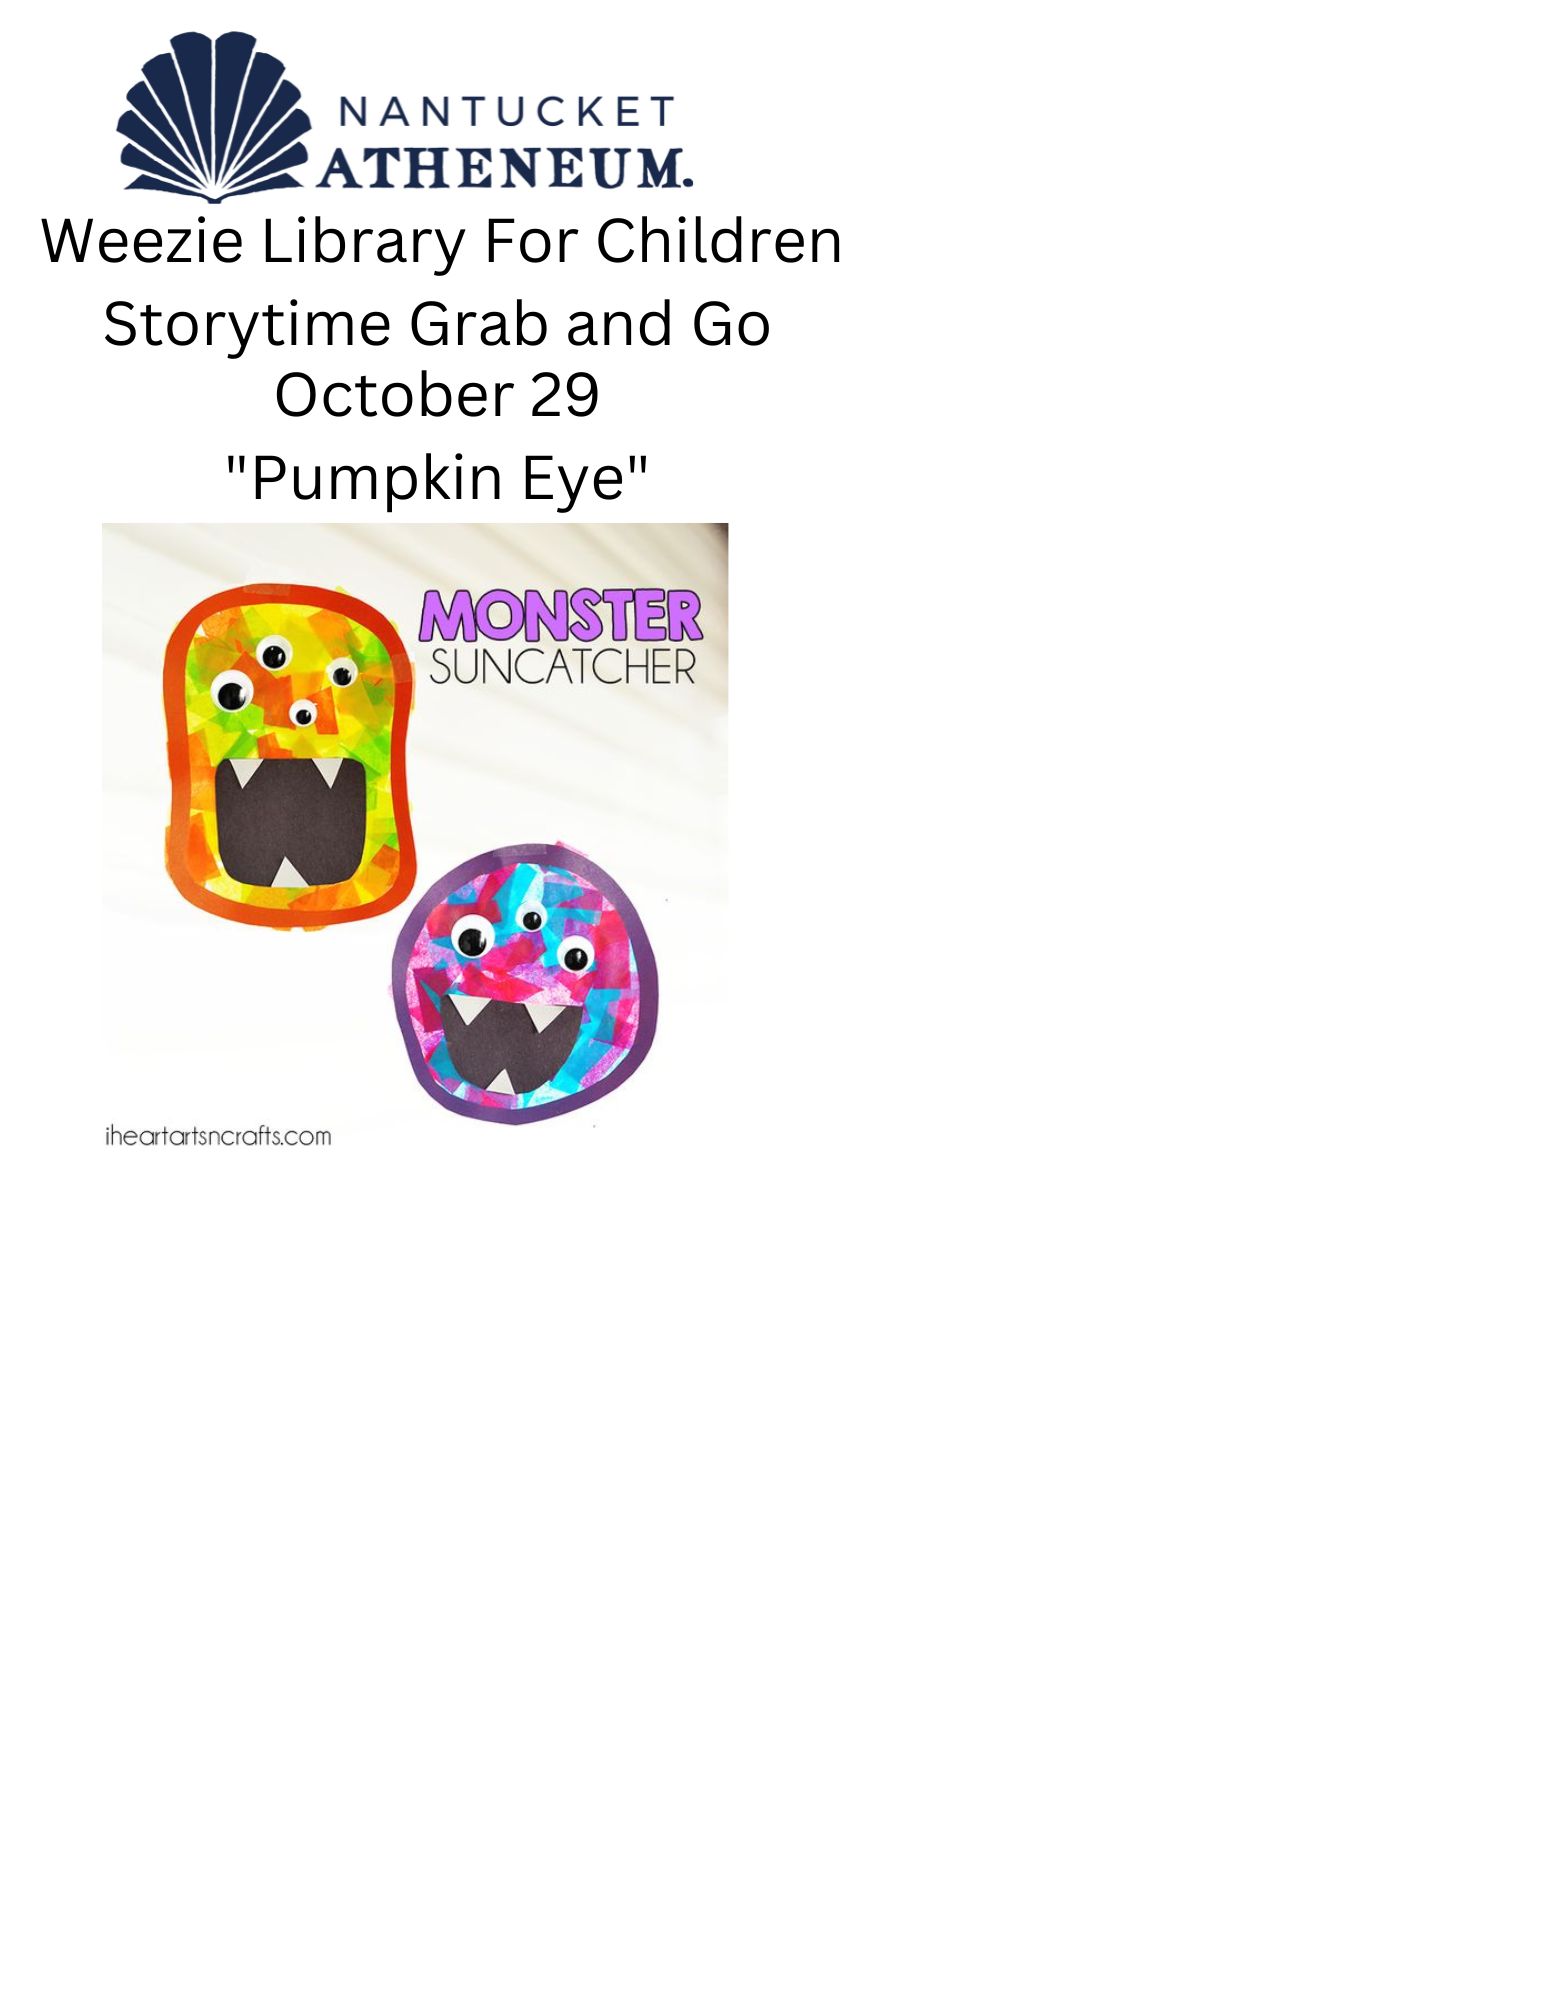 Whoooooo! Make a colorful monster pumpkin to hang in the window!